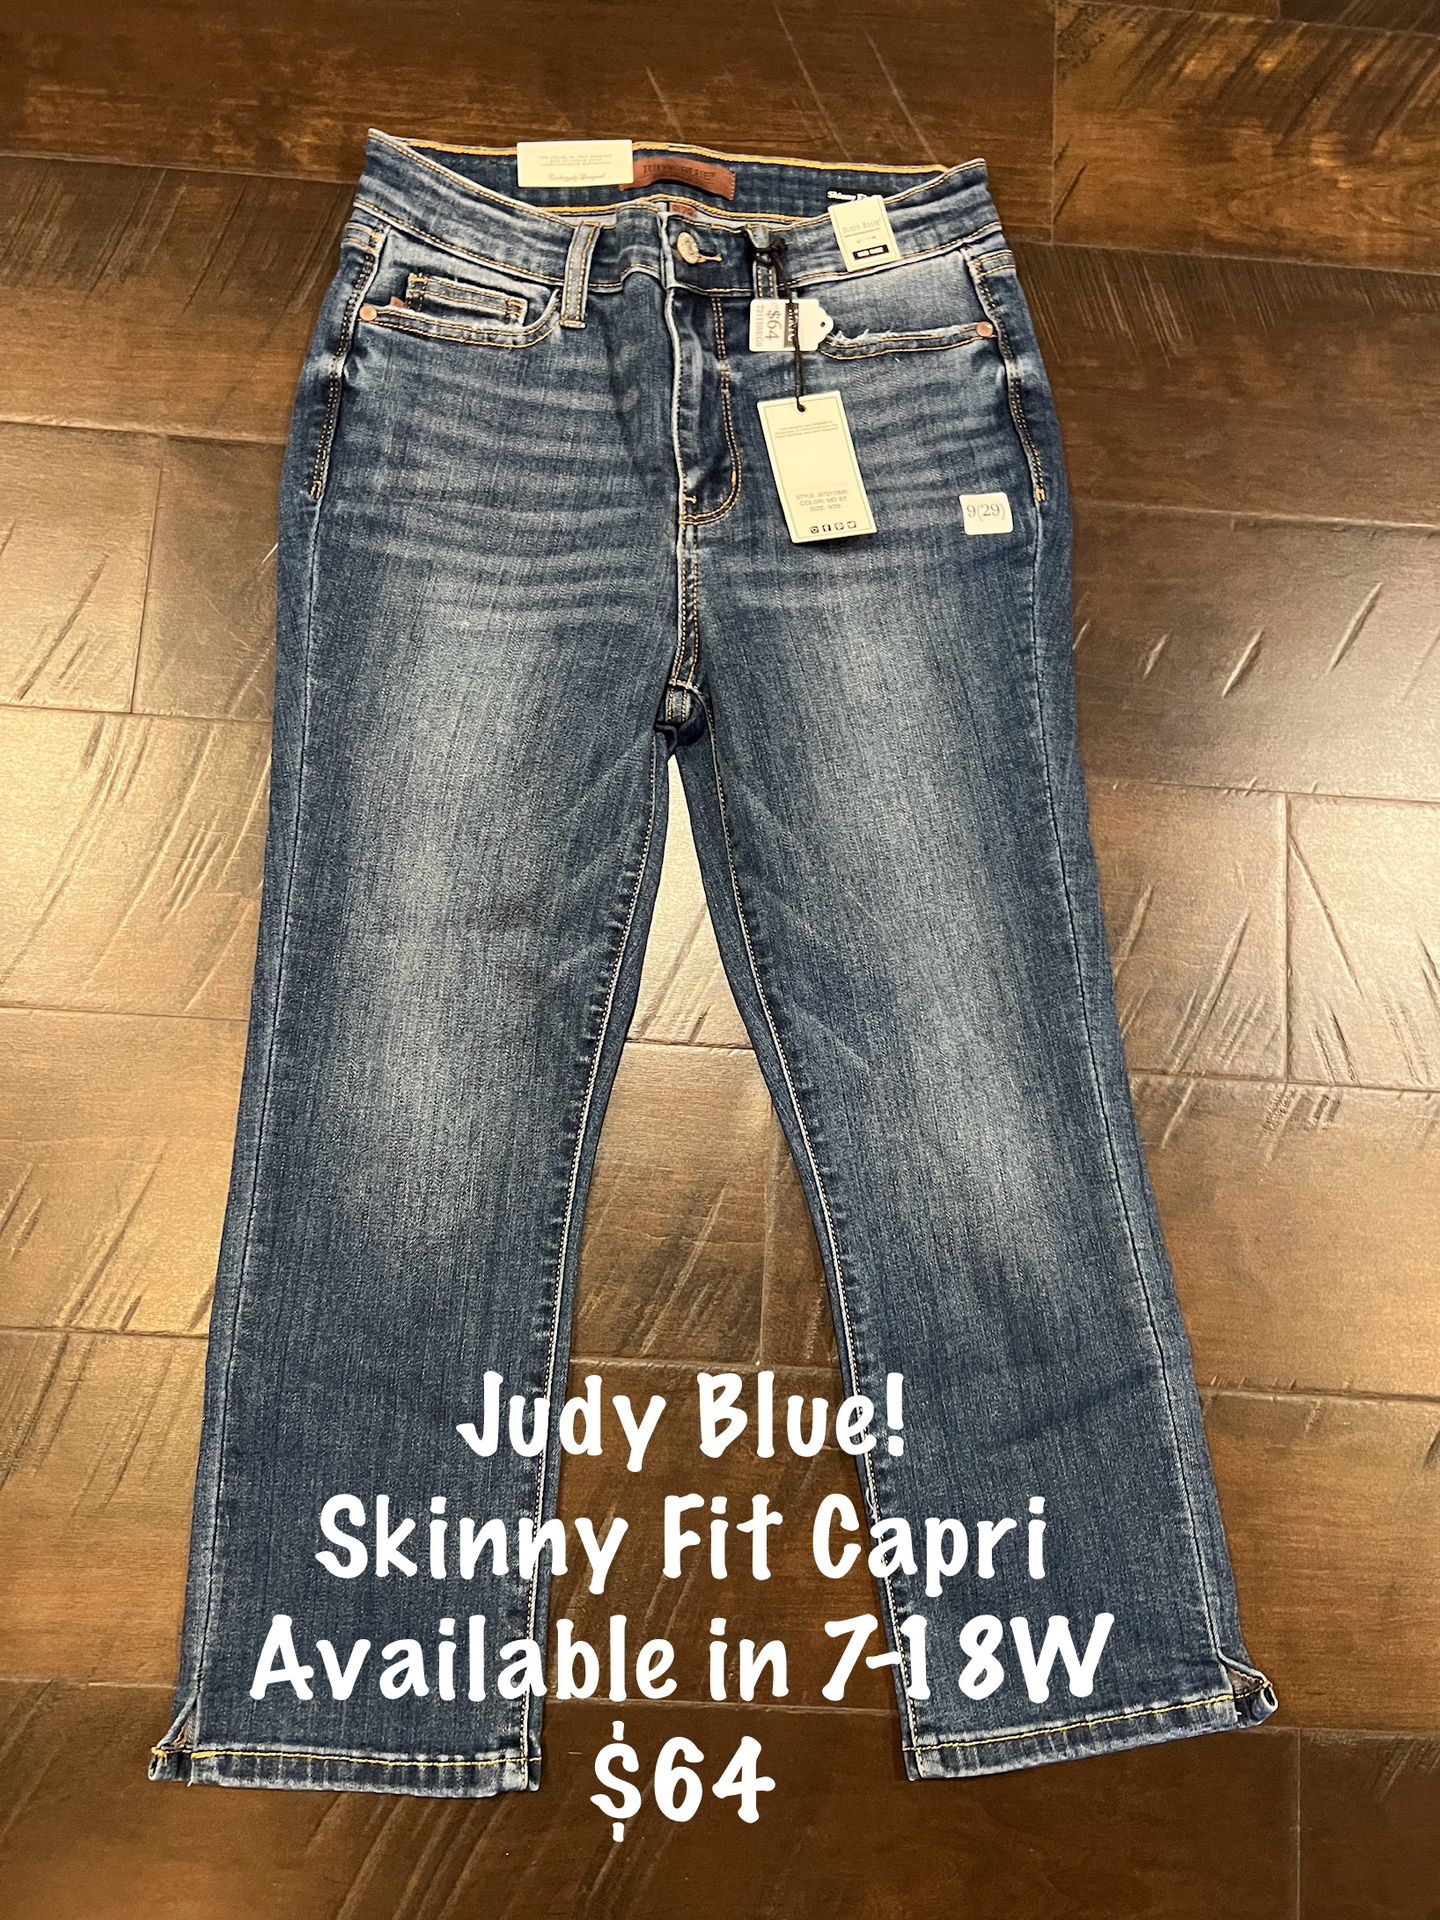 Judy Blue Jeans!